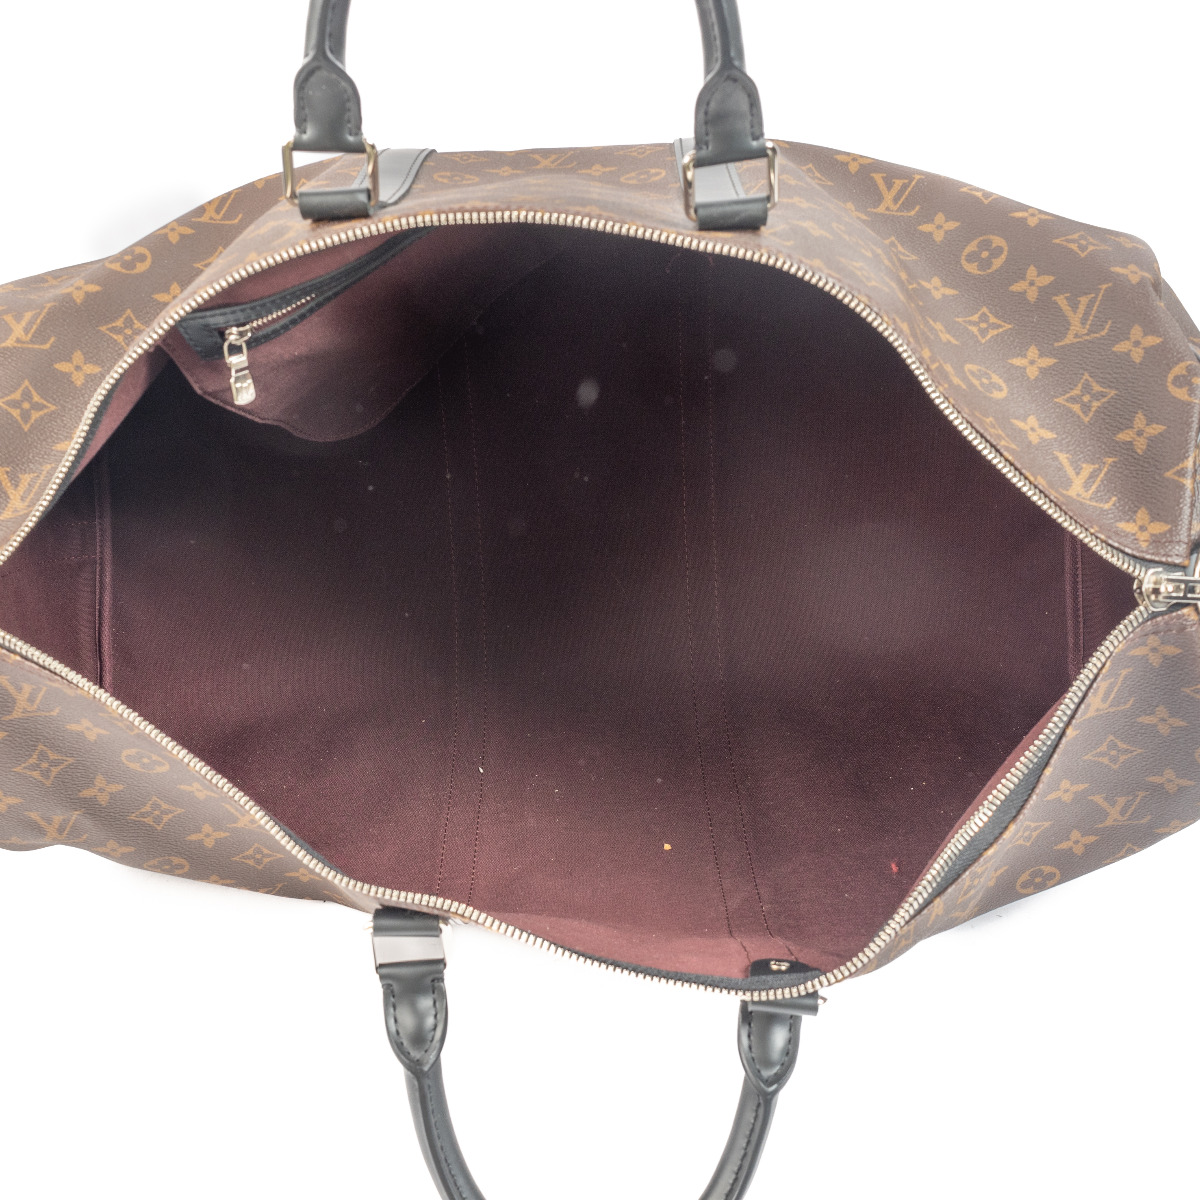 Louis Vuitton Keepall Travel bag 361486